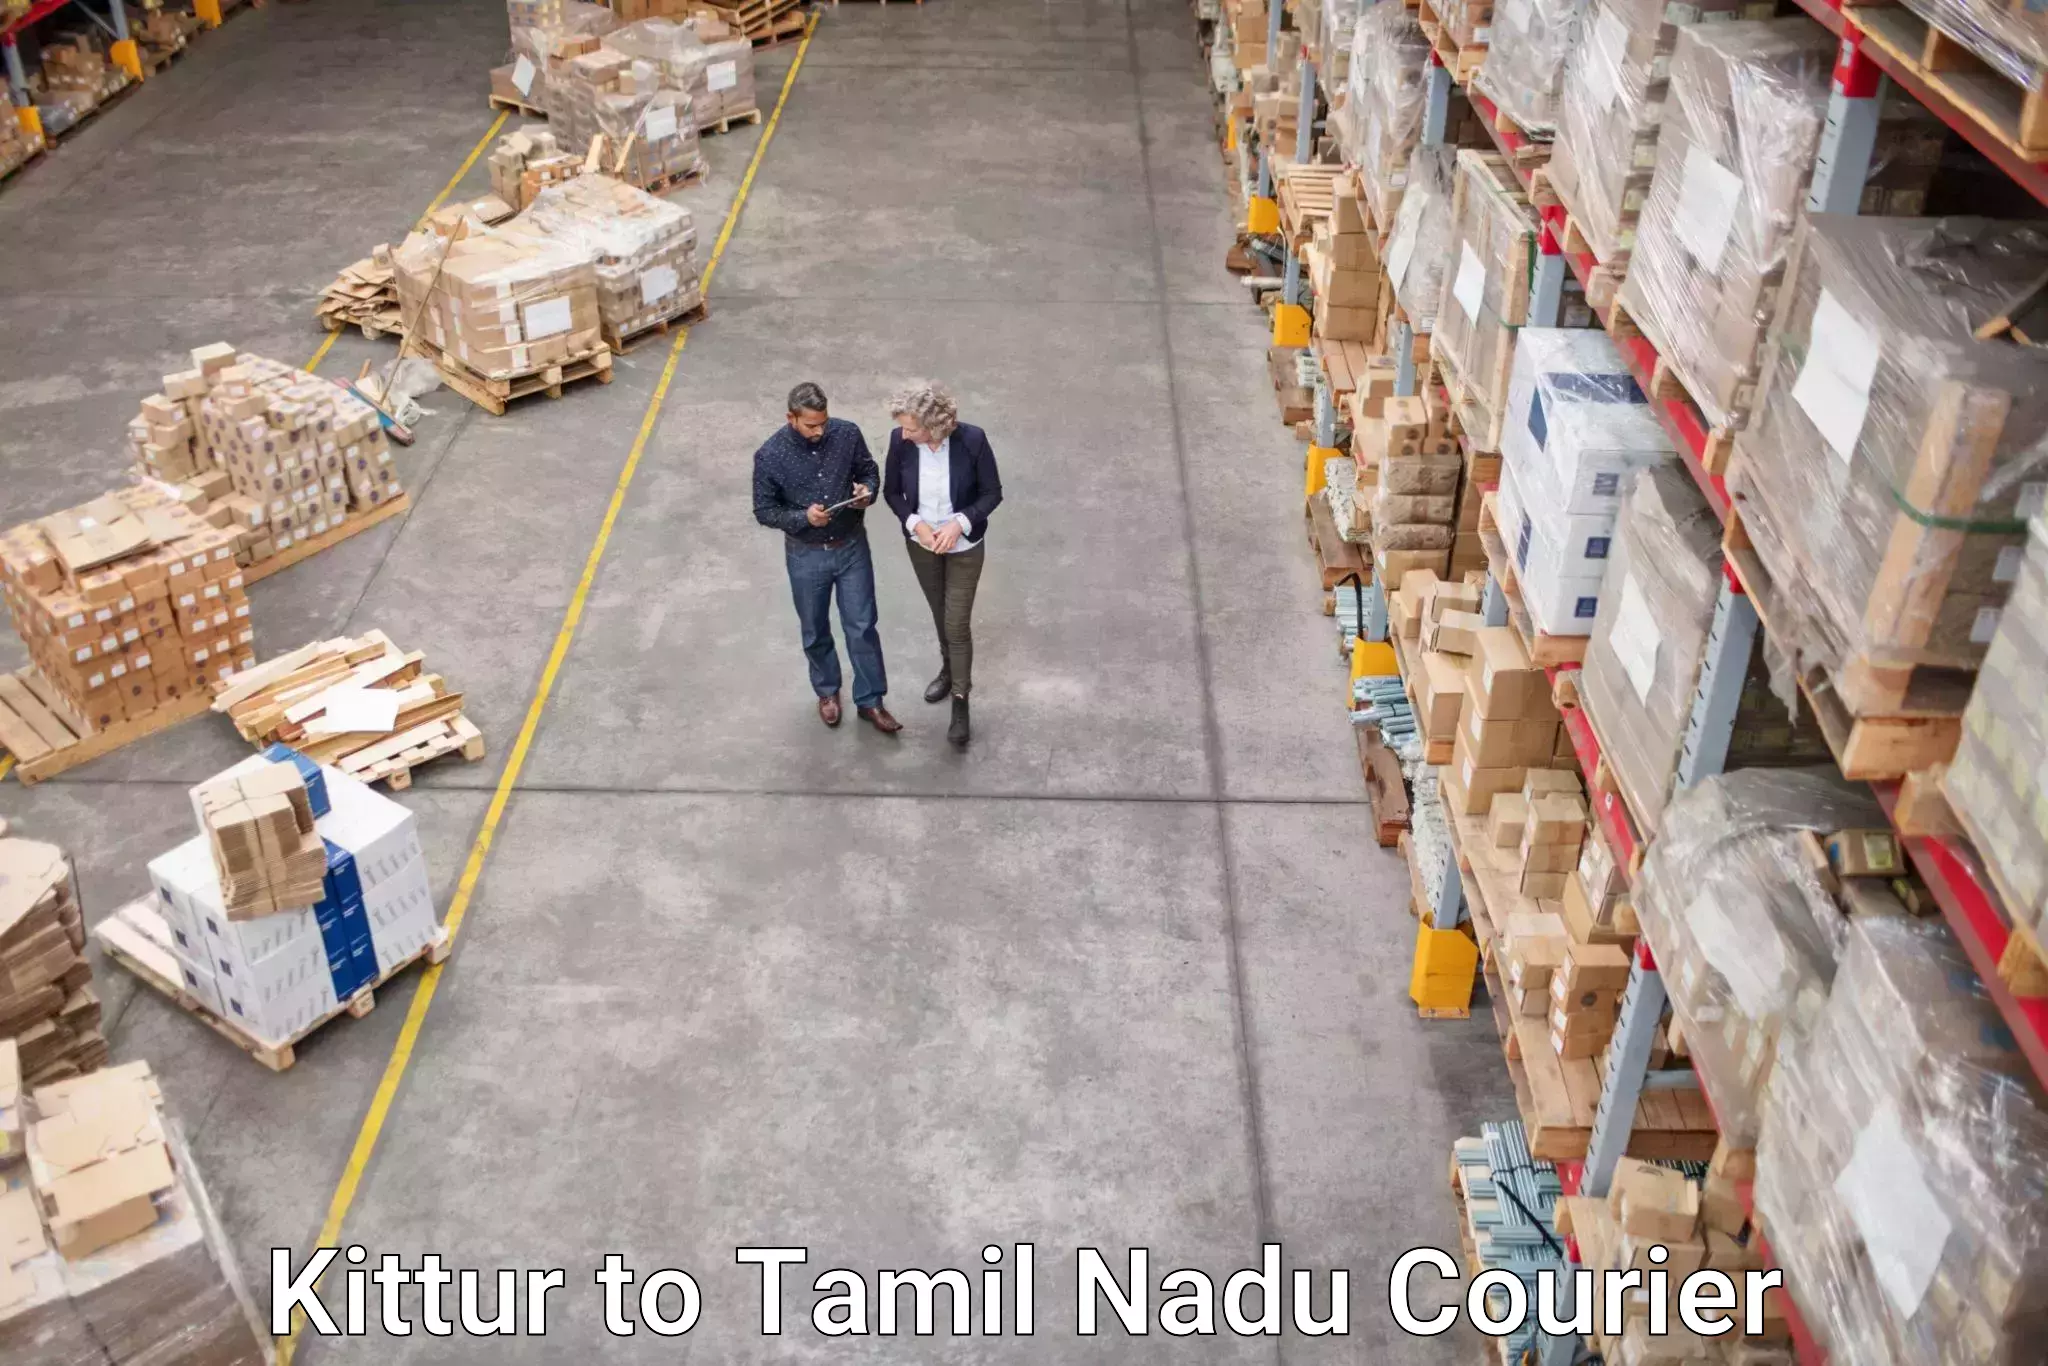 Courier app Kittur to Tamil Nadu